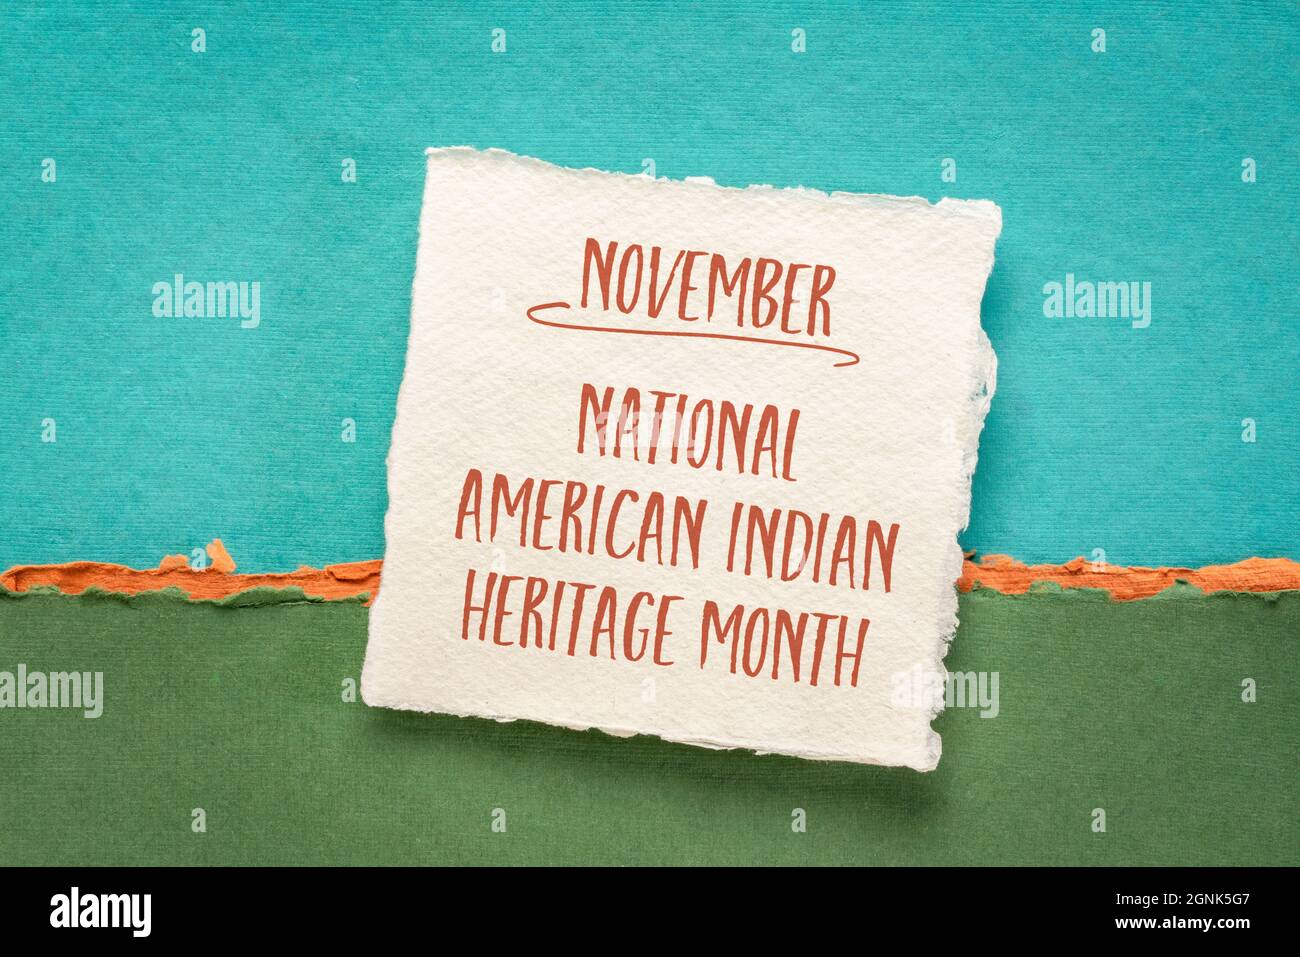 November - National American Indian Heritage Month, Handschrift auf handgeschöpftem Papier gegen abstrakte Papierlandschaft, Erinnerung an Geschichte und Kult Stockfoto